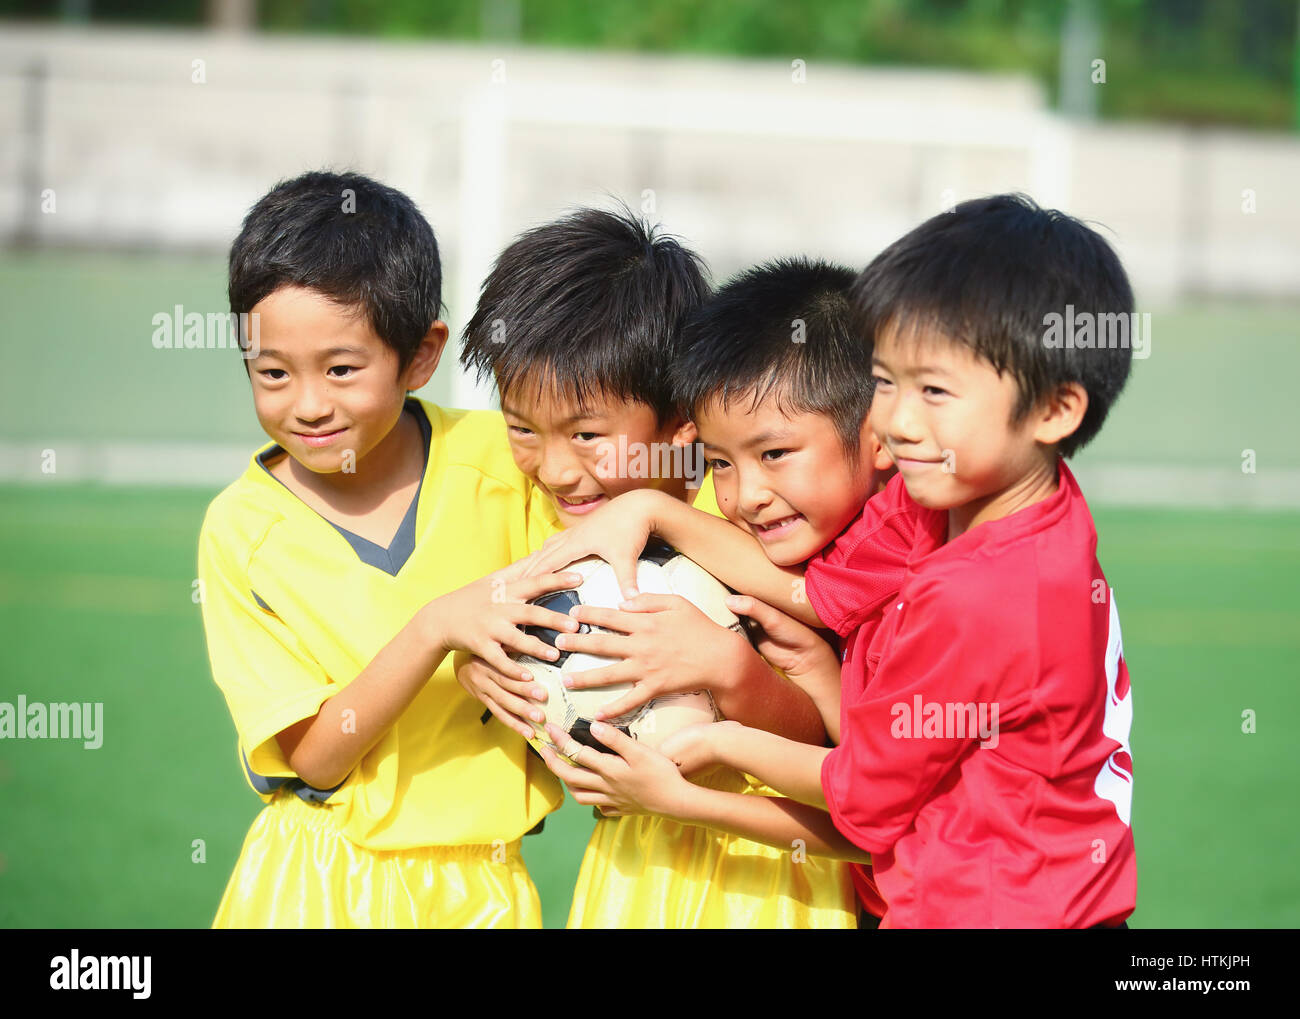 Japanese kids playing soccer Stock Photo